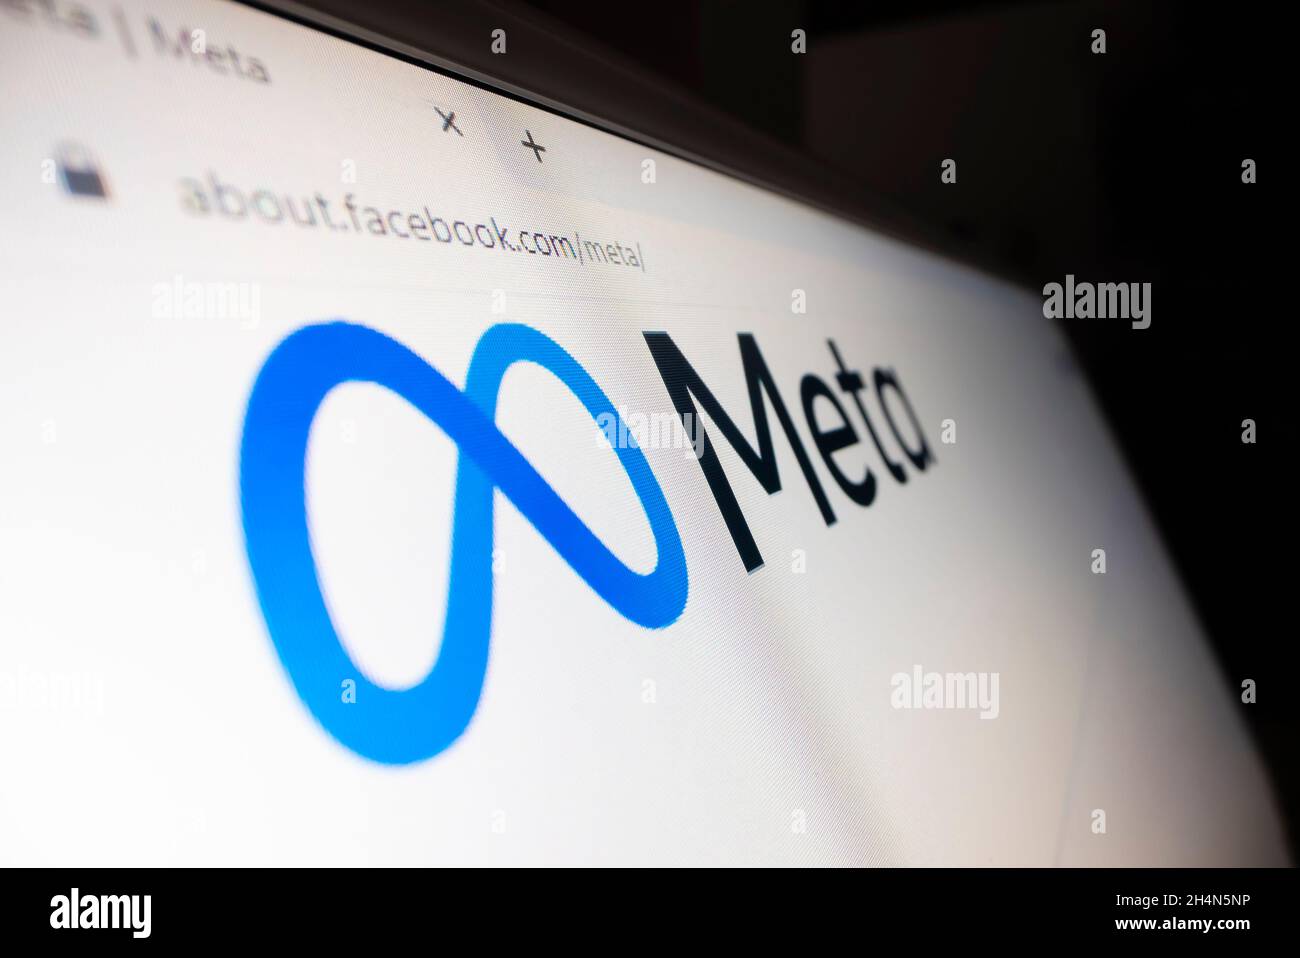 Melbourne, Australia - Nov 4, 2021: Close-up view of Meta logo on its website Stock Photo